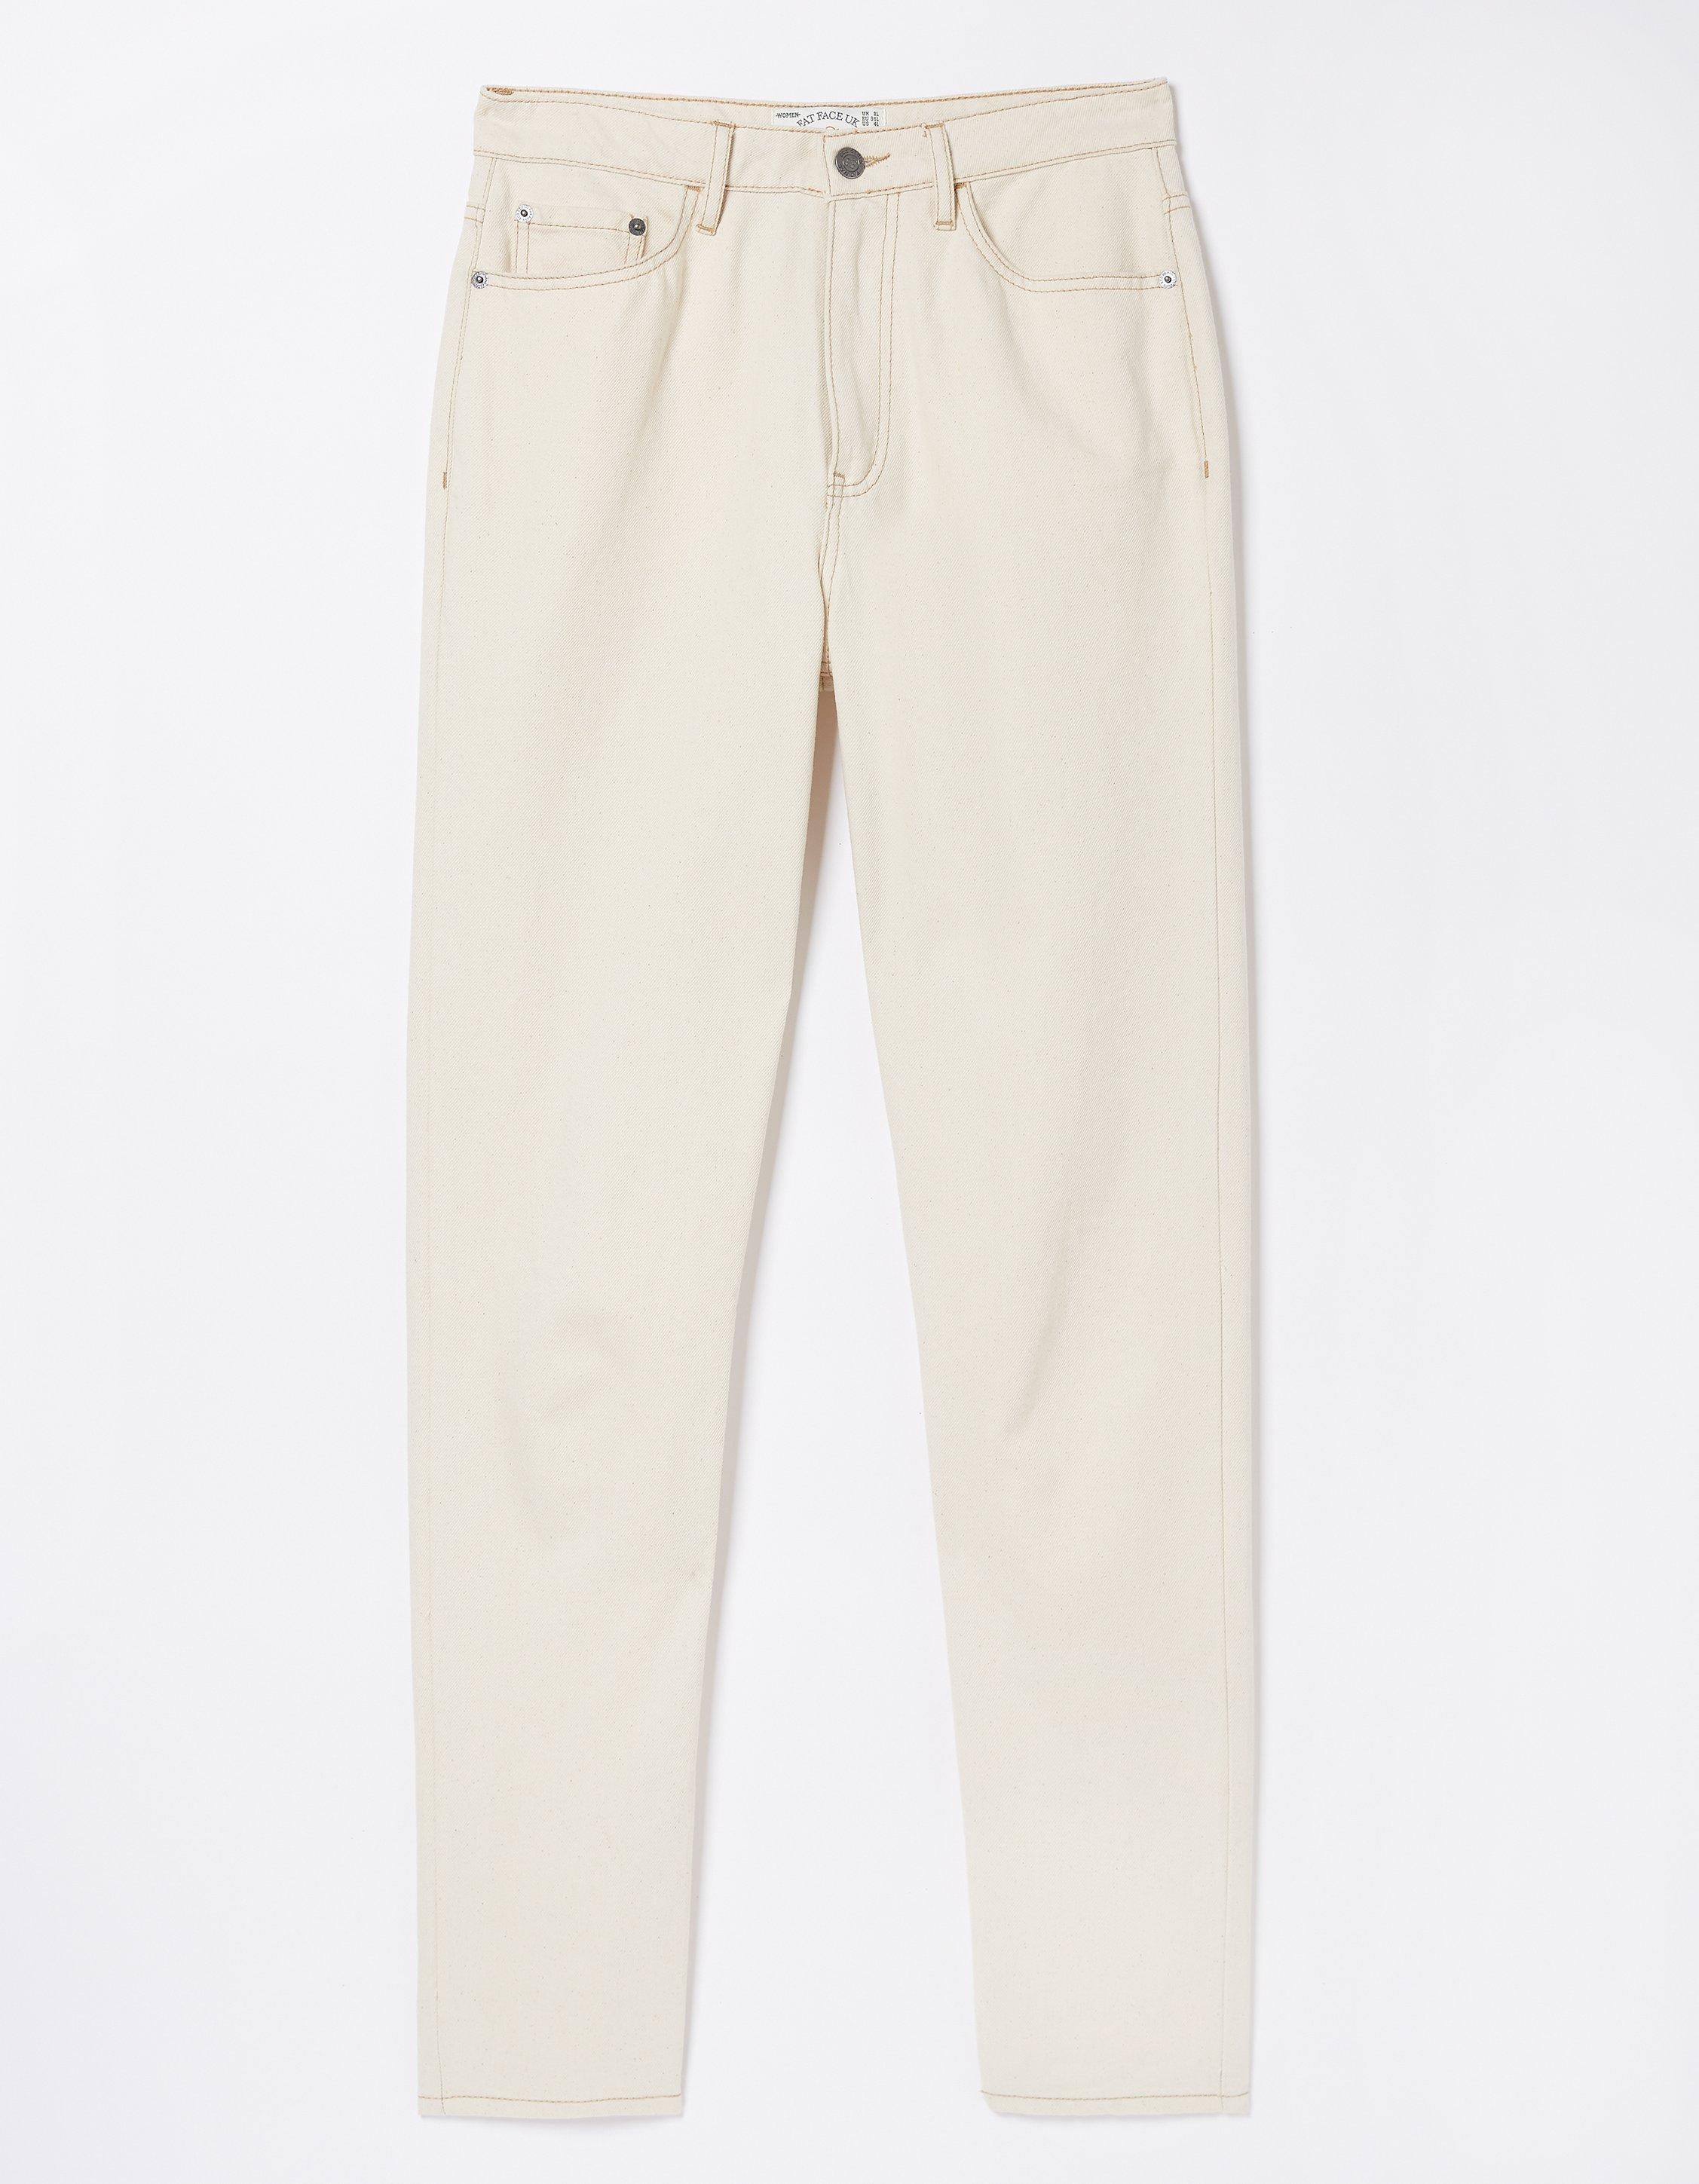 H&M sweatpants, Women's Fashion, Bottoms, Jeans & Leggings on Carousell